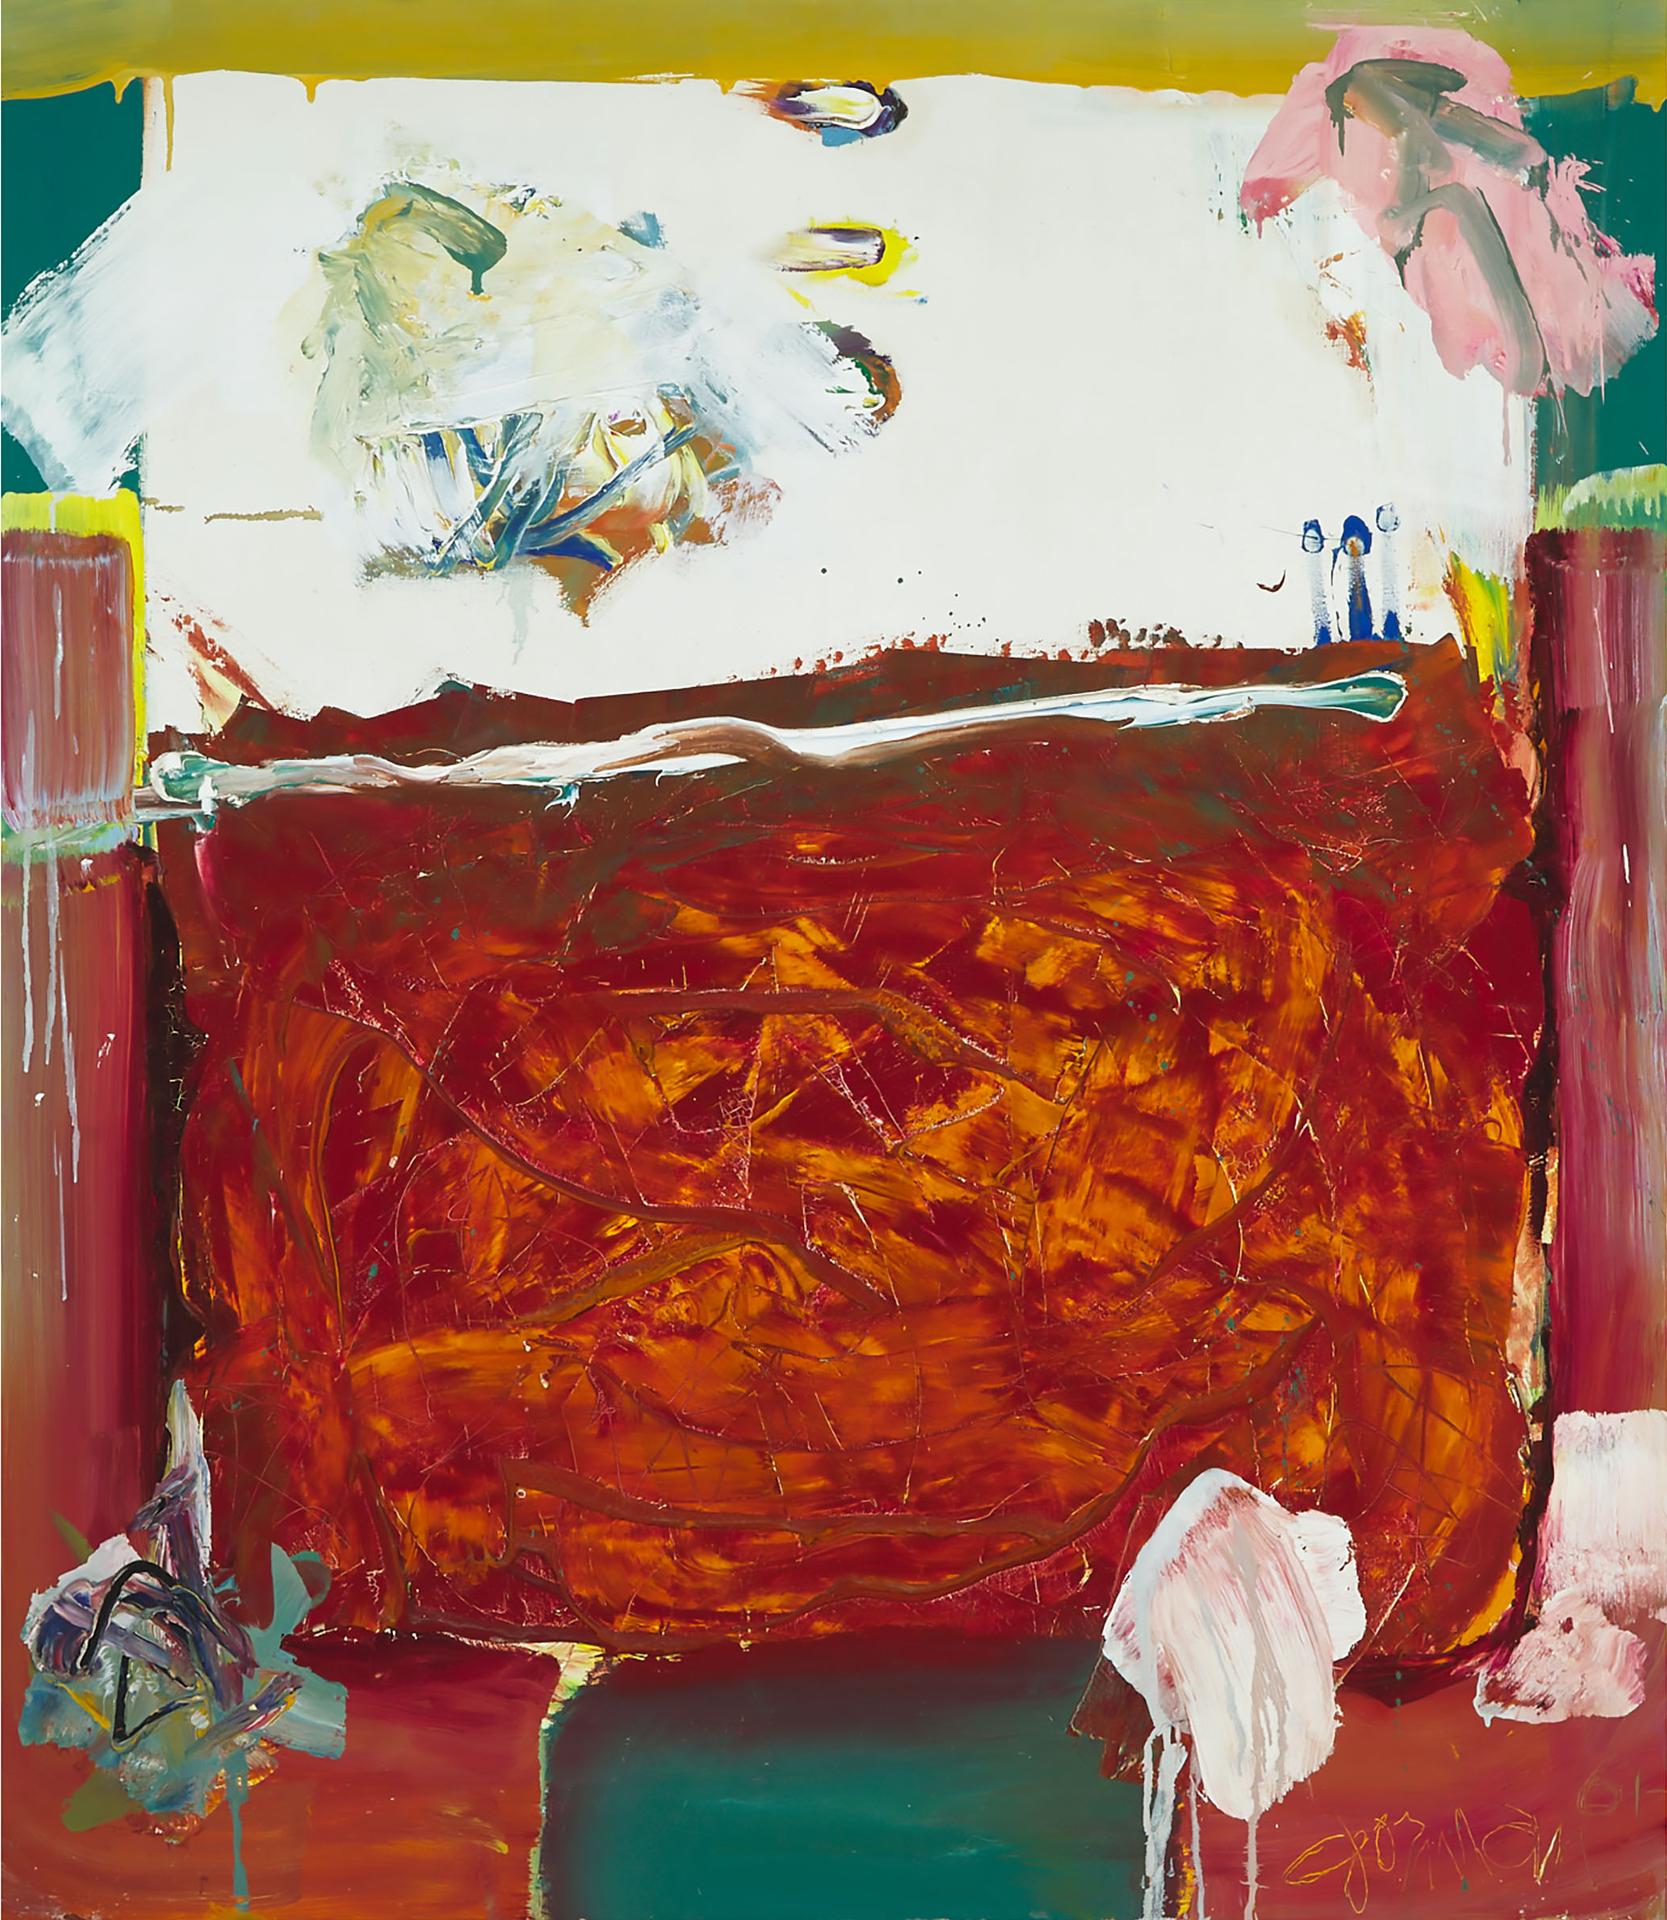 Richard Borthwick Gorman (1935-2010) - Painting Of A Prince, 1961